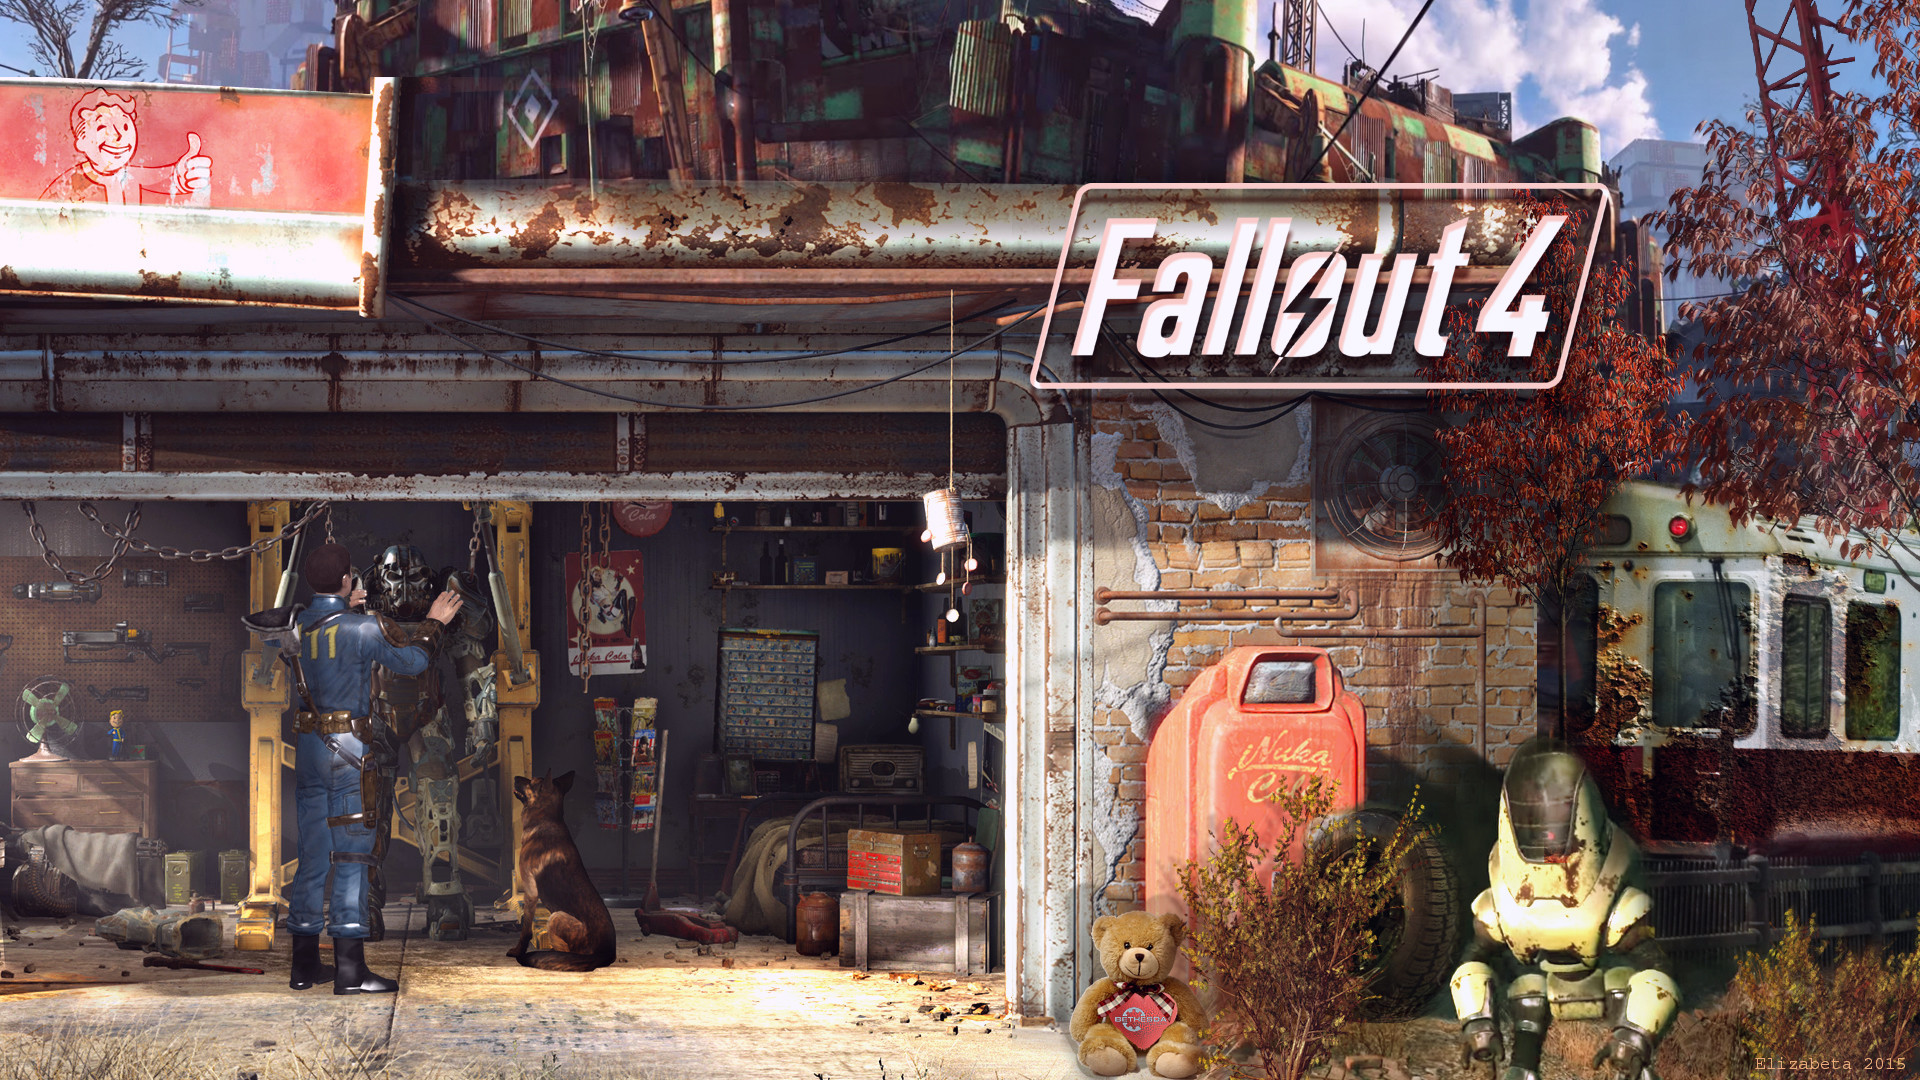 1920x1080 Fallout 4 wallpaper by Betka Fallout 4 wallpaper by Betka